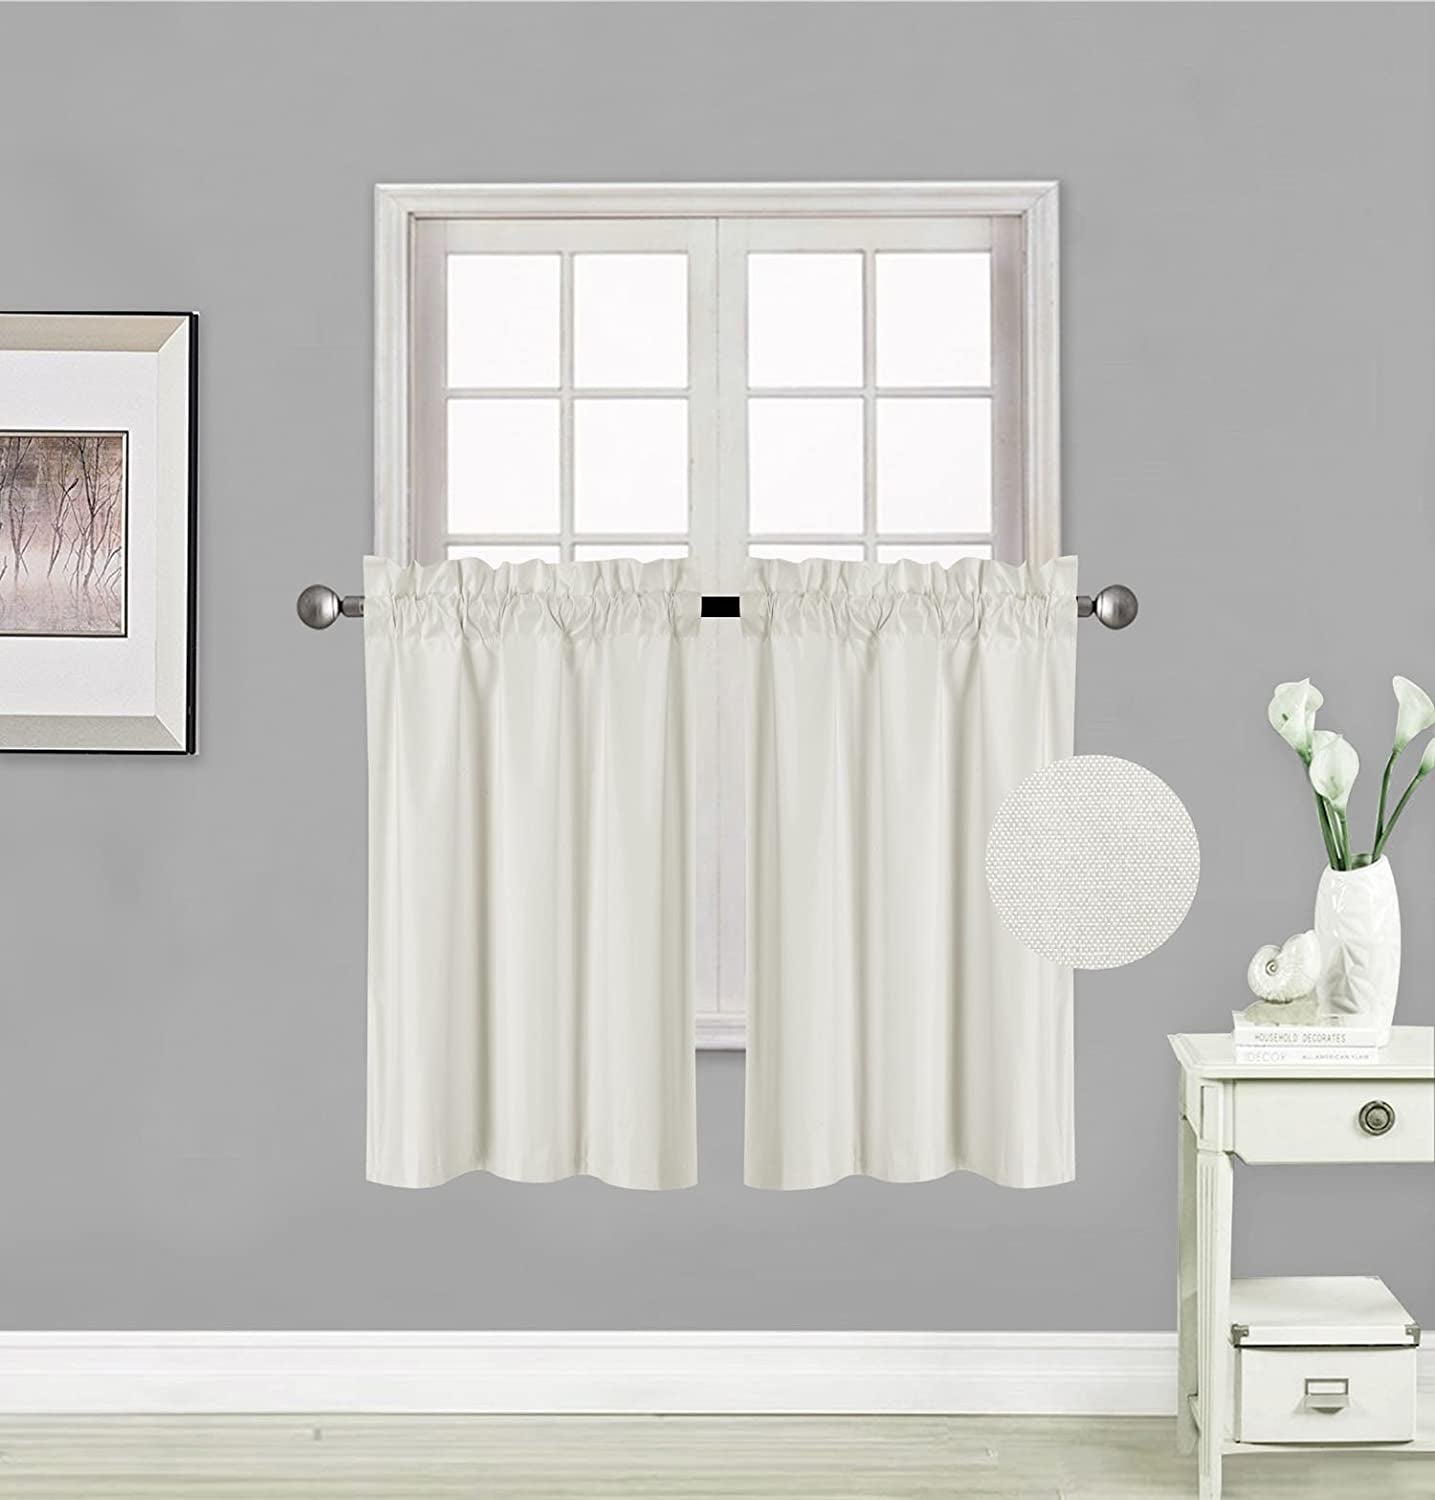 Elegant Home 2 Short Panels Tiers Small Window Treatment Curtain Blackout 28" W X 36" L Each for Kitchen Bathroom # R5  Elegant Home Decor Ivory  